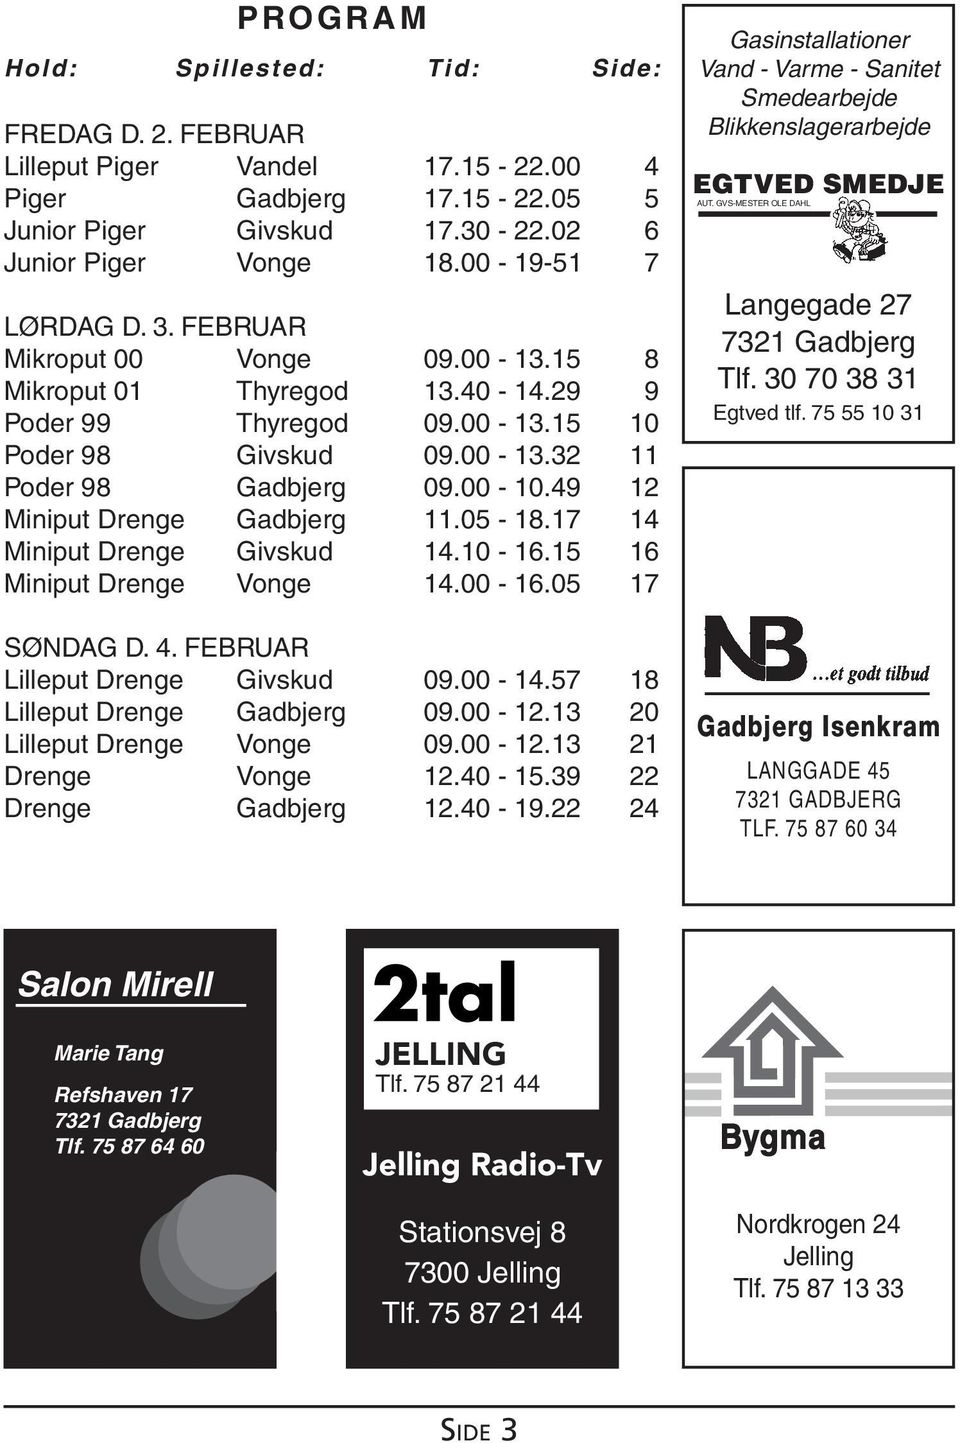 49 12 Miniput Drenge Gadbjerg 11.05-18.17 14 Miniput Drenge Givskud 14.10-16.15 16 Miniput Drenge Vonge 14.00-16.05 17 SØNDAG D. 4. FEBRUAR Lilleput Drenge Givskud 09.00-14.